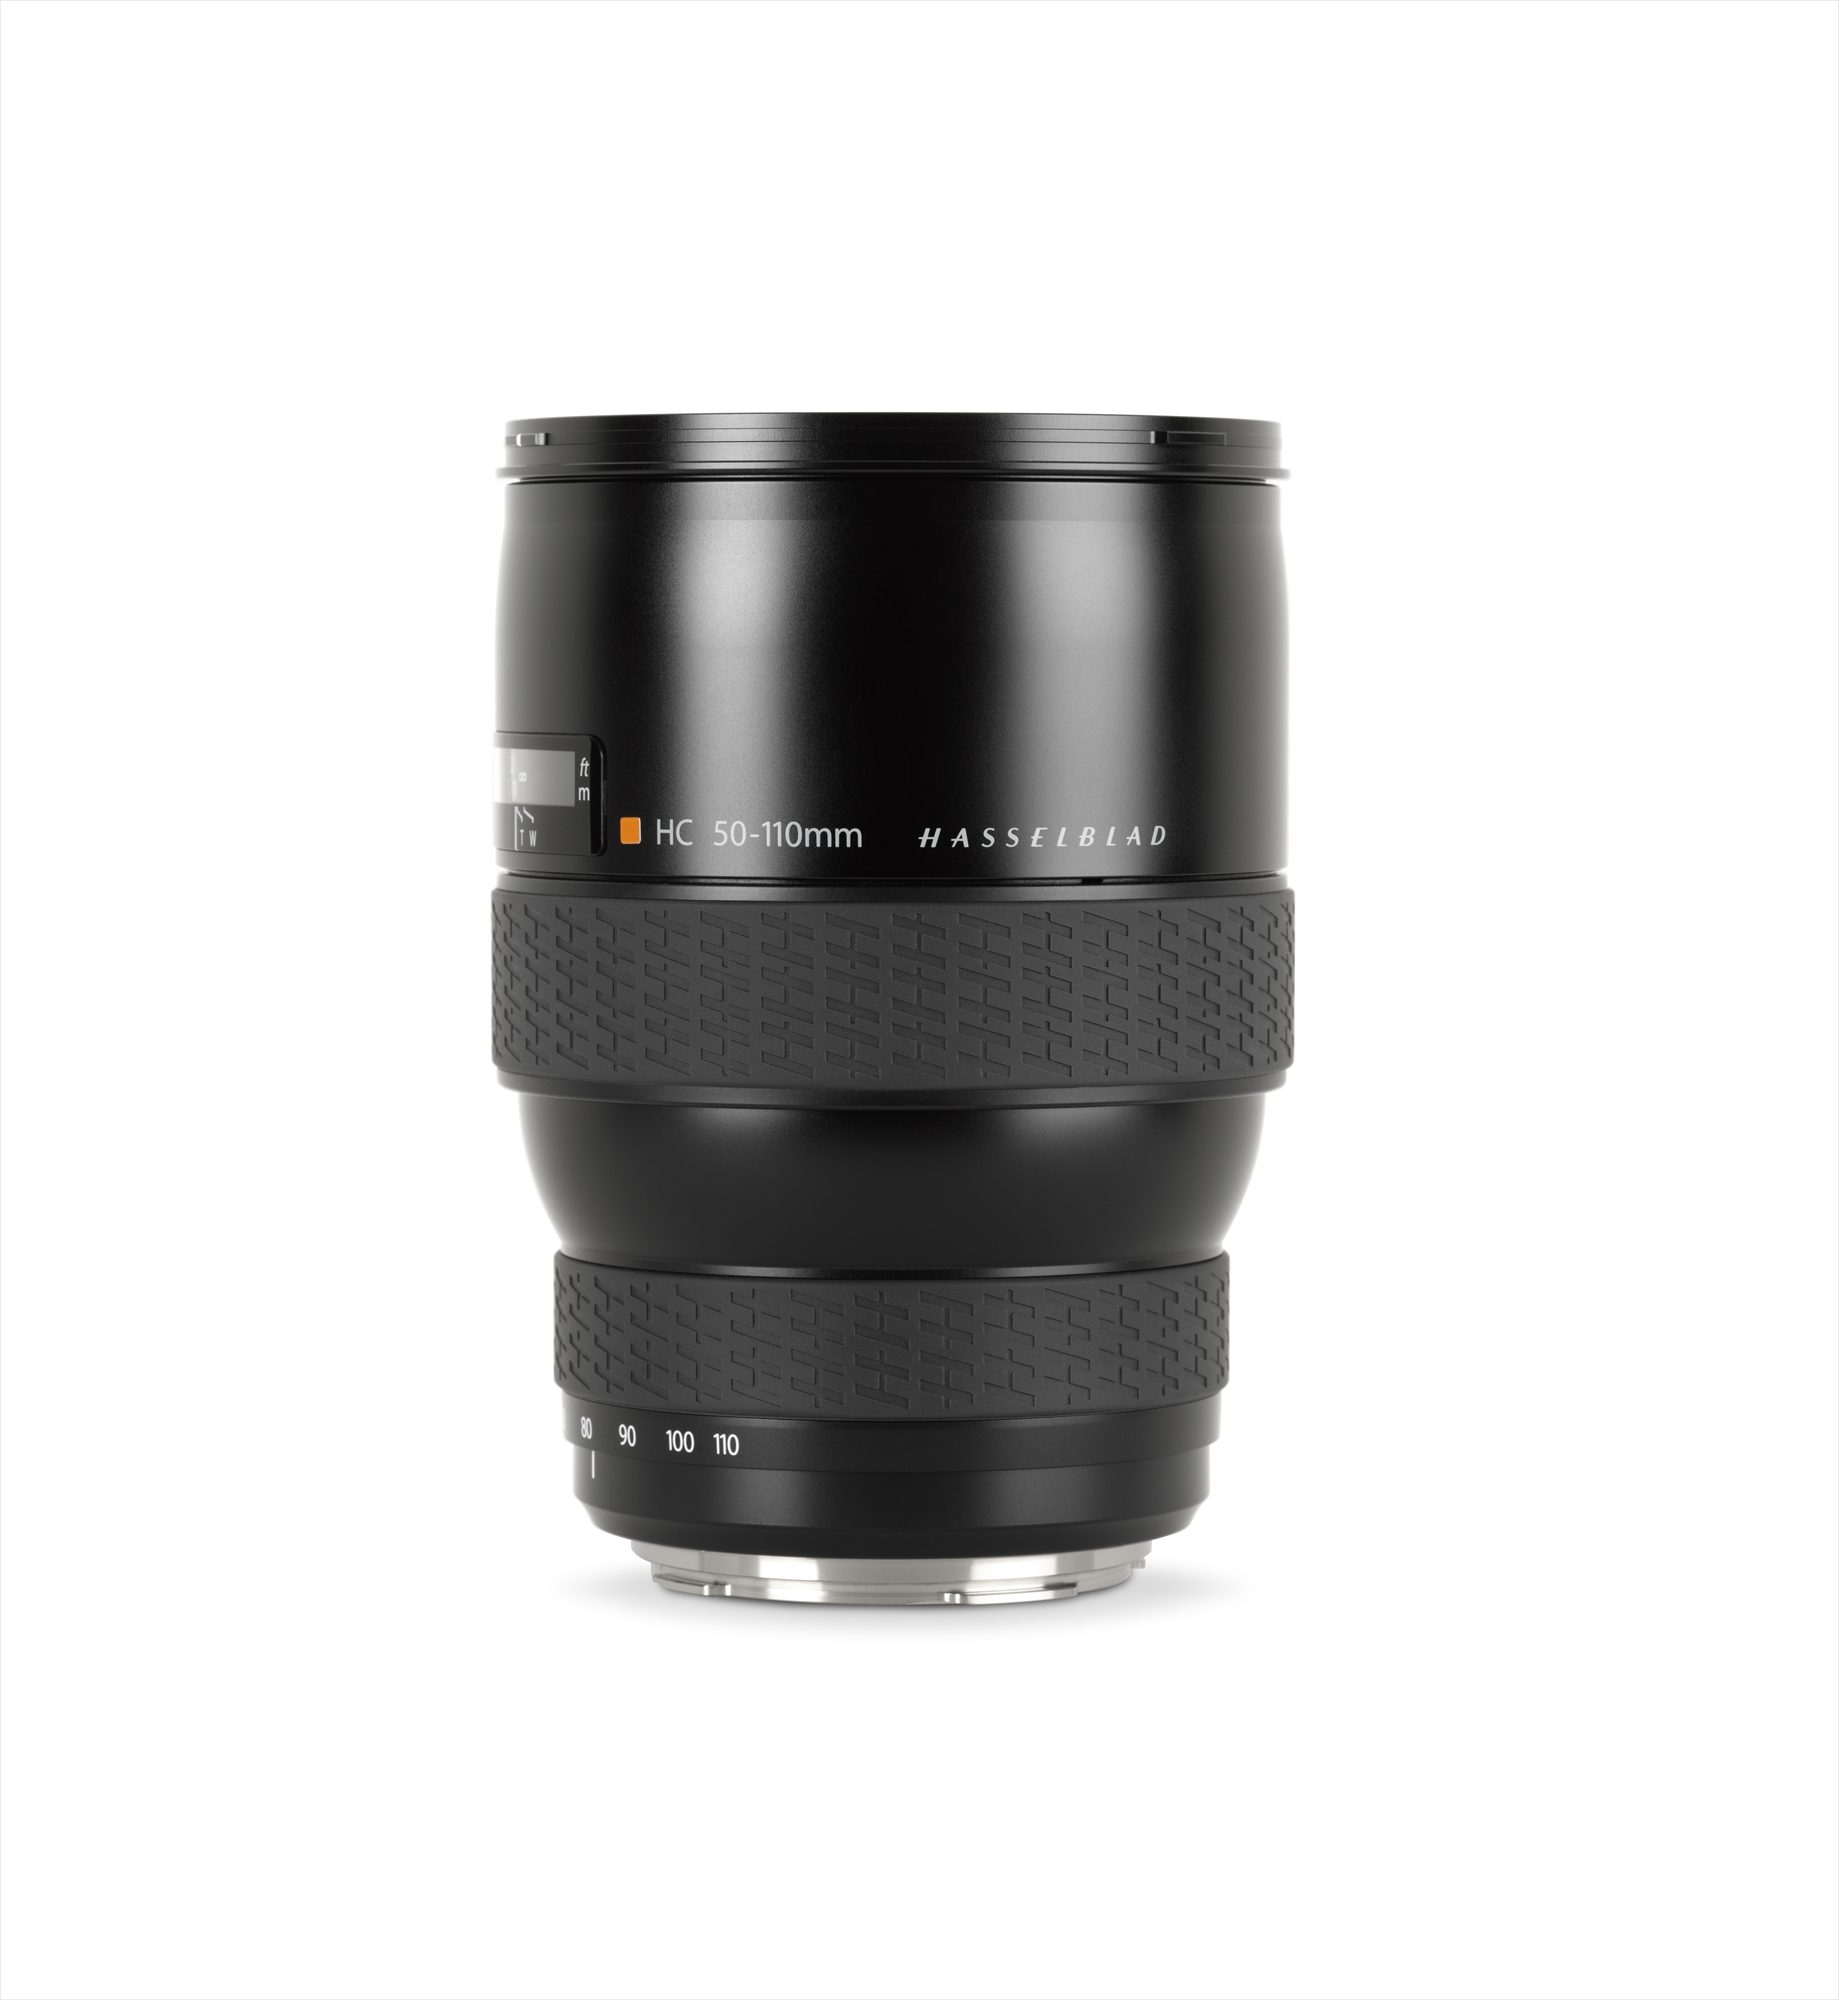 Hasselblad Lens HC F3.5-4.5/50-110mm